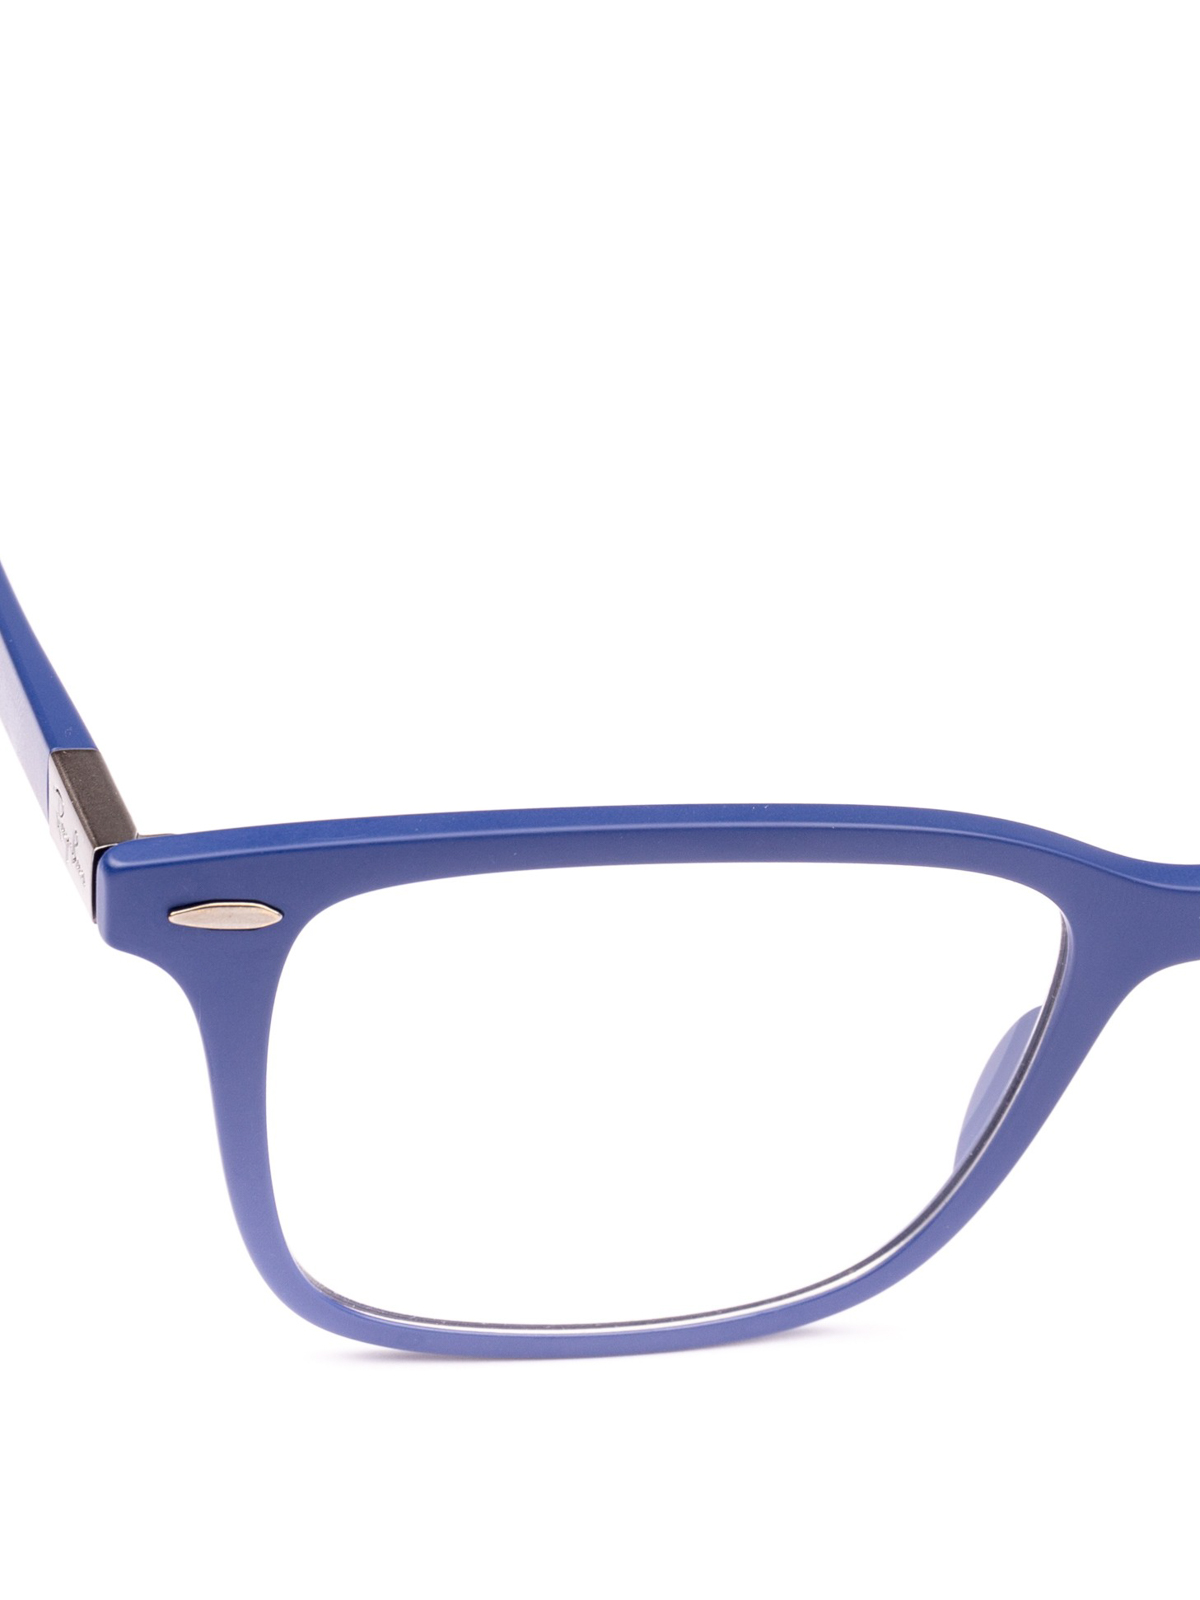 blu ban glasses